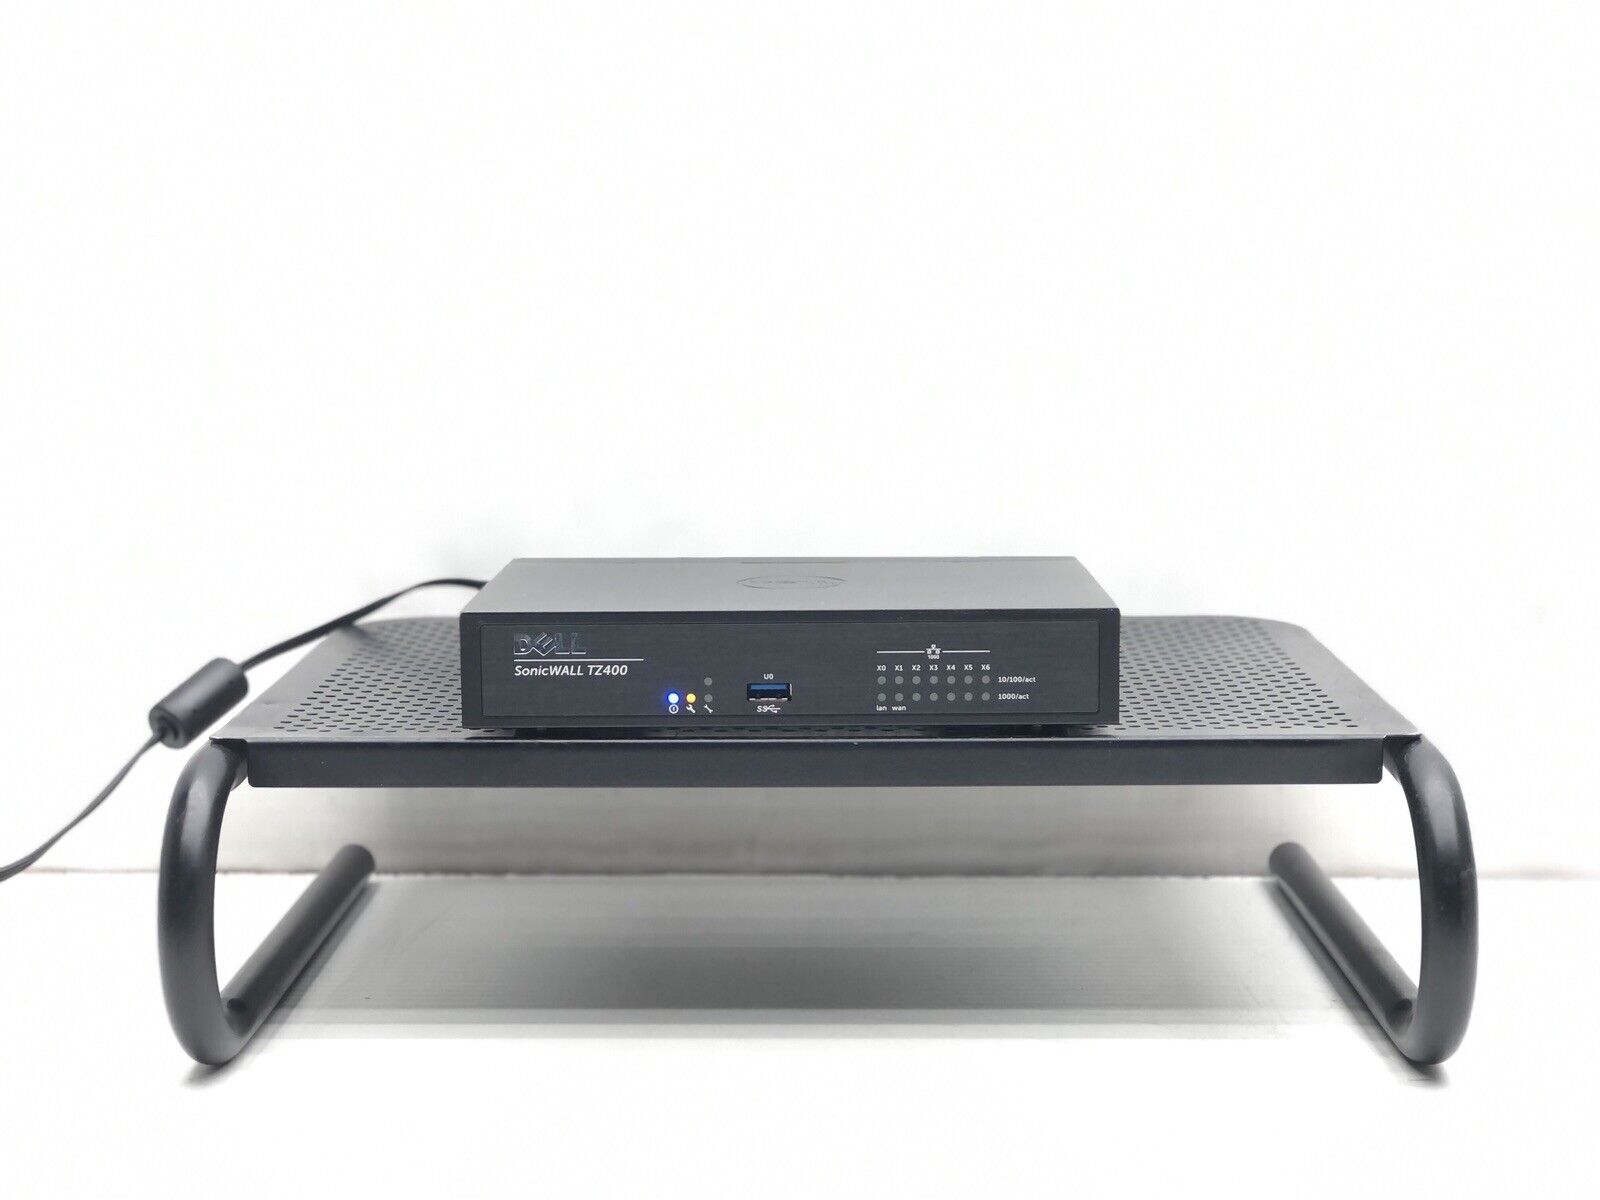 Dell SonicWALL TZ400 W Wireless Firewall Appliance APl28-0B5 W/ Power Supply